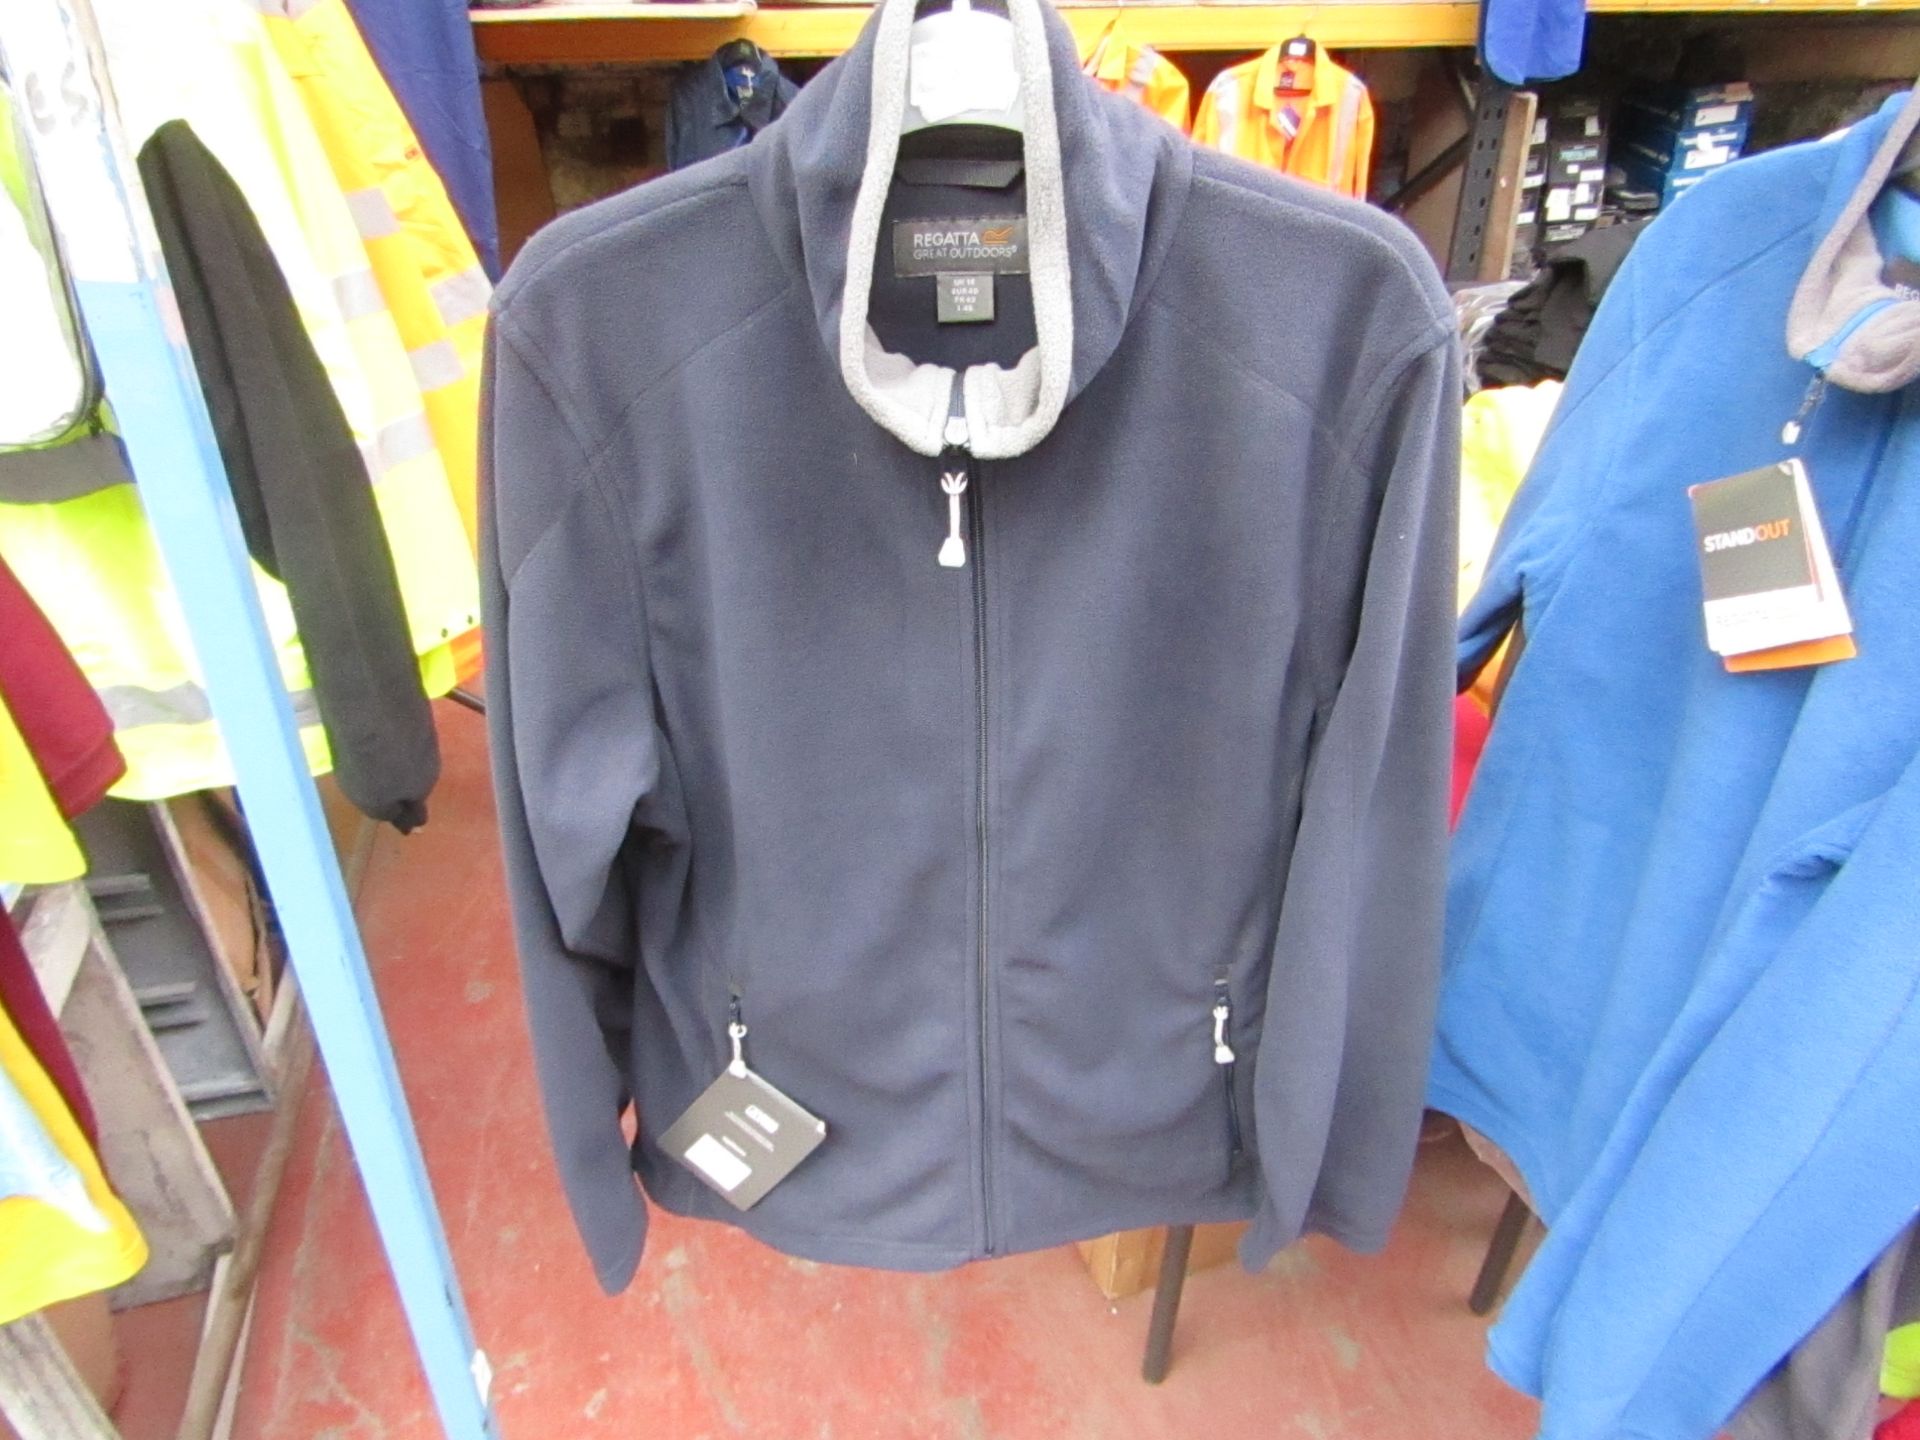 Ladies Regatta Professional Fleece Navy / Smoke. Size 16. new in Packaging